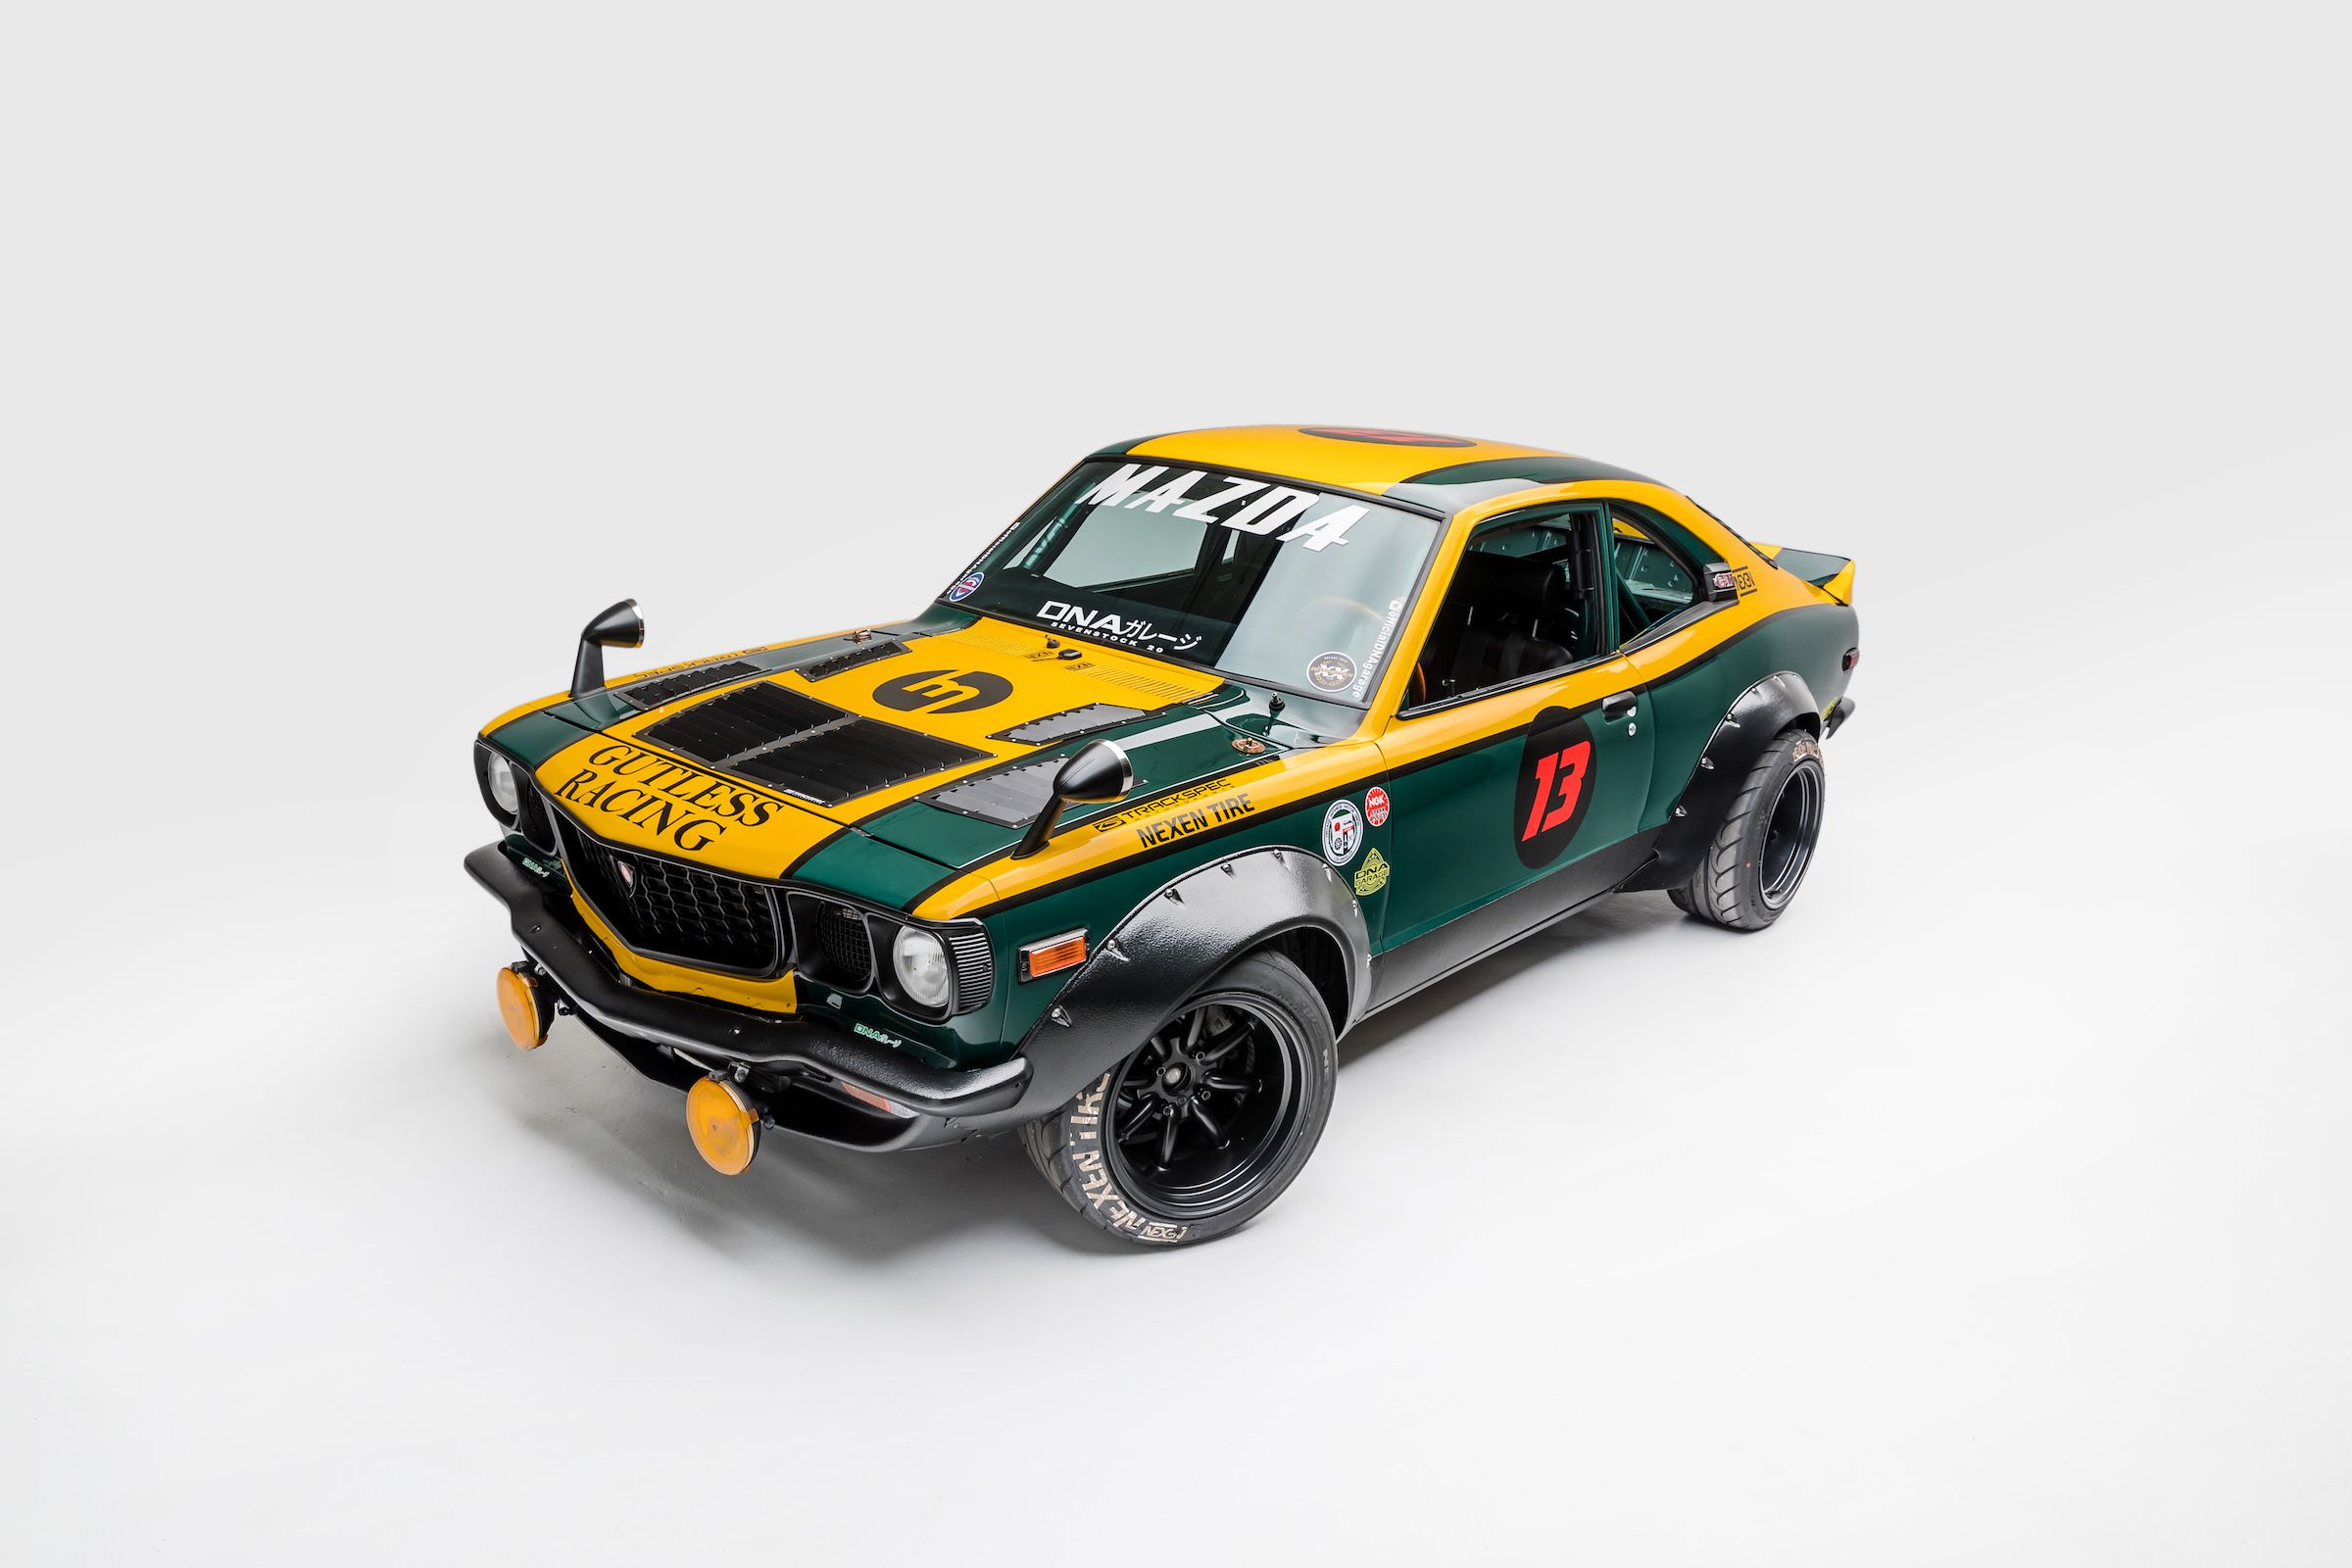 DNA Garage Mazda RX-3 Race Car - 400 bhp Triple Rotor